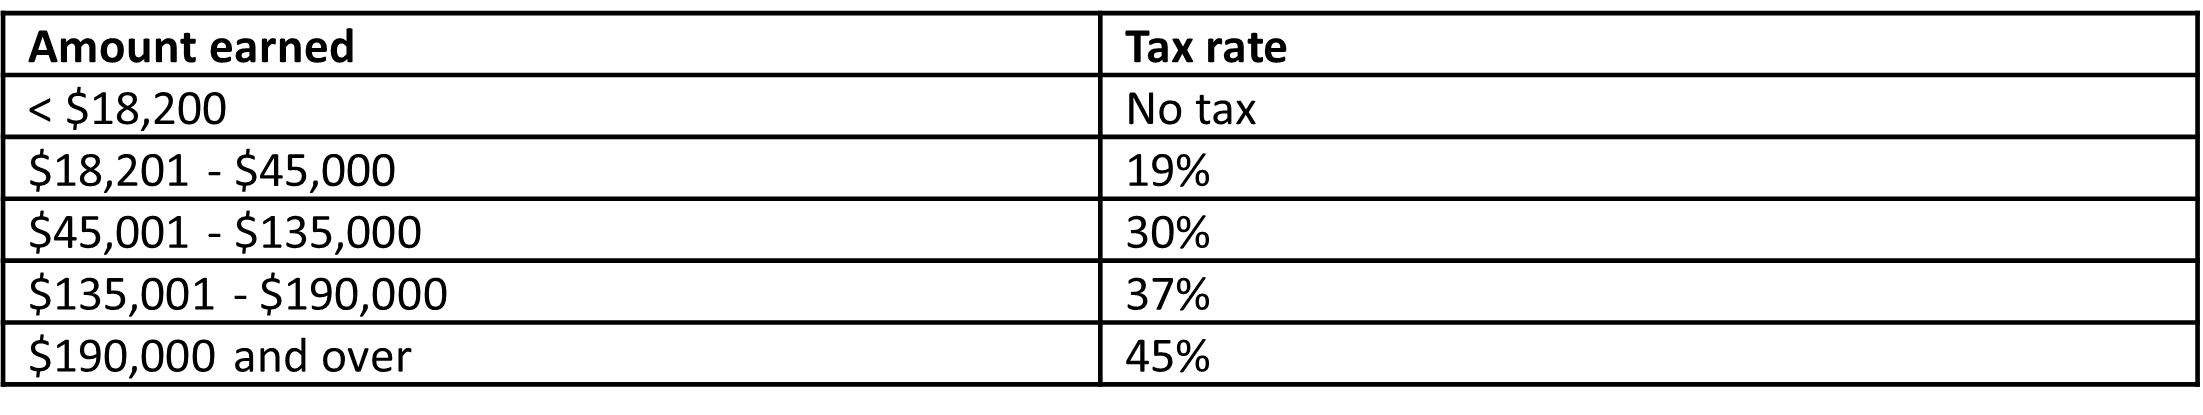 Proposed marginal tax rates